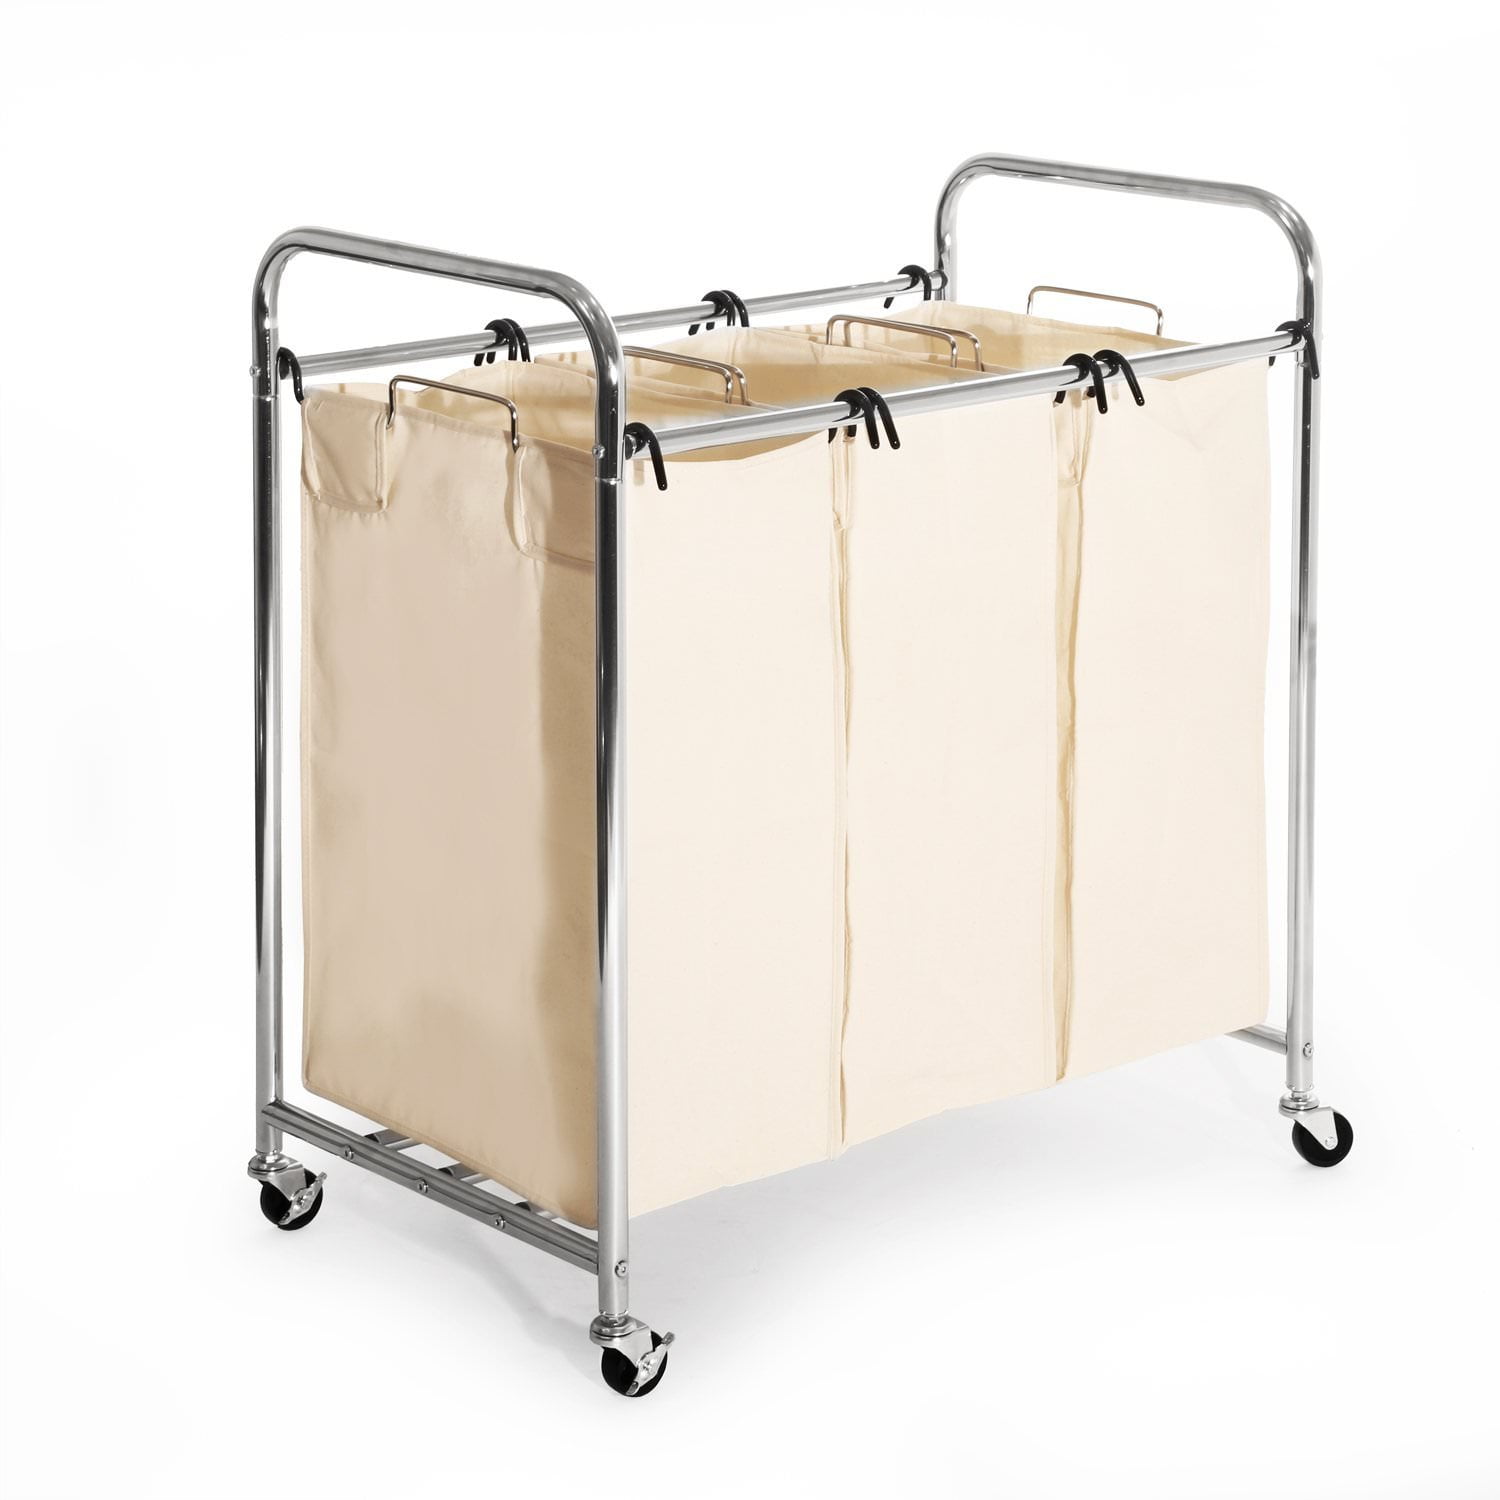 33"L 3-bag  Rolling Laundry Hamper Sorter Cart Clothes Organizer w/ Hanging Bar